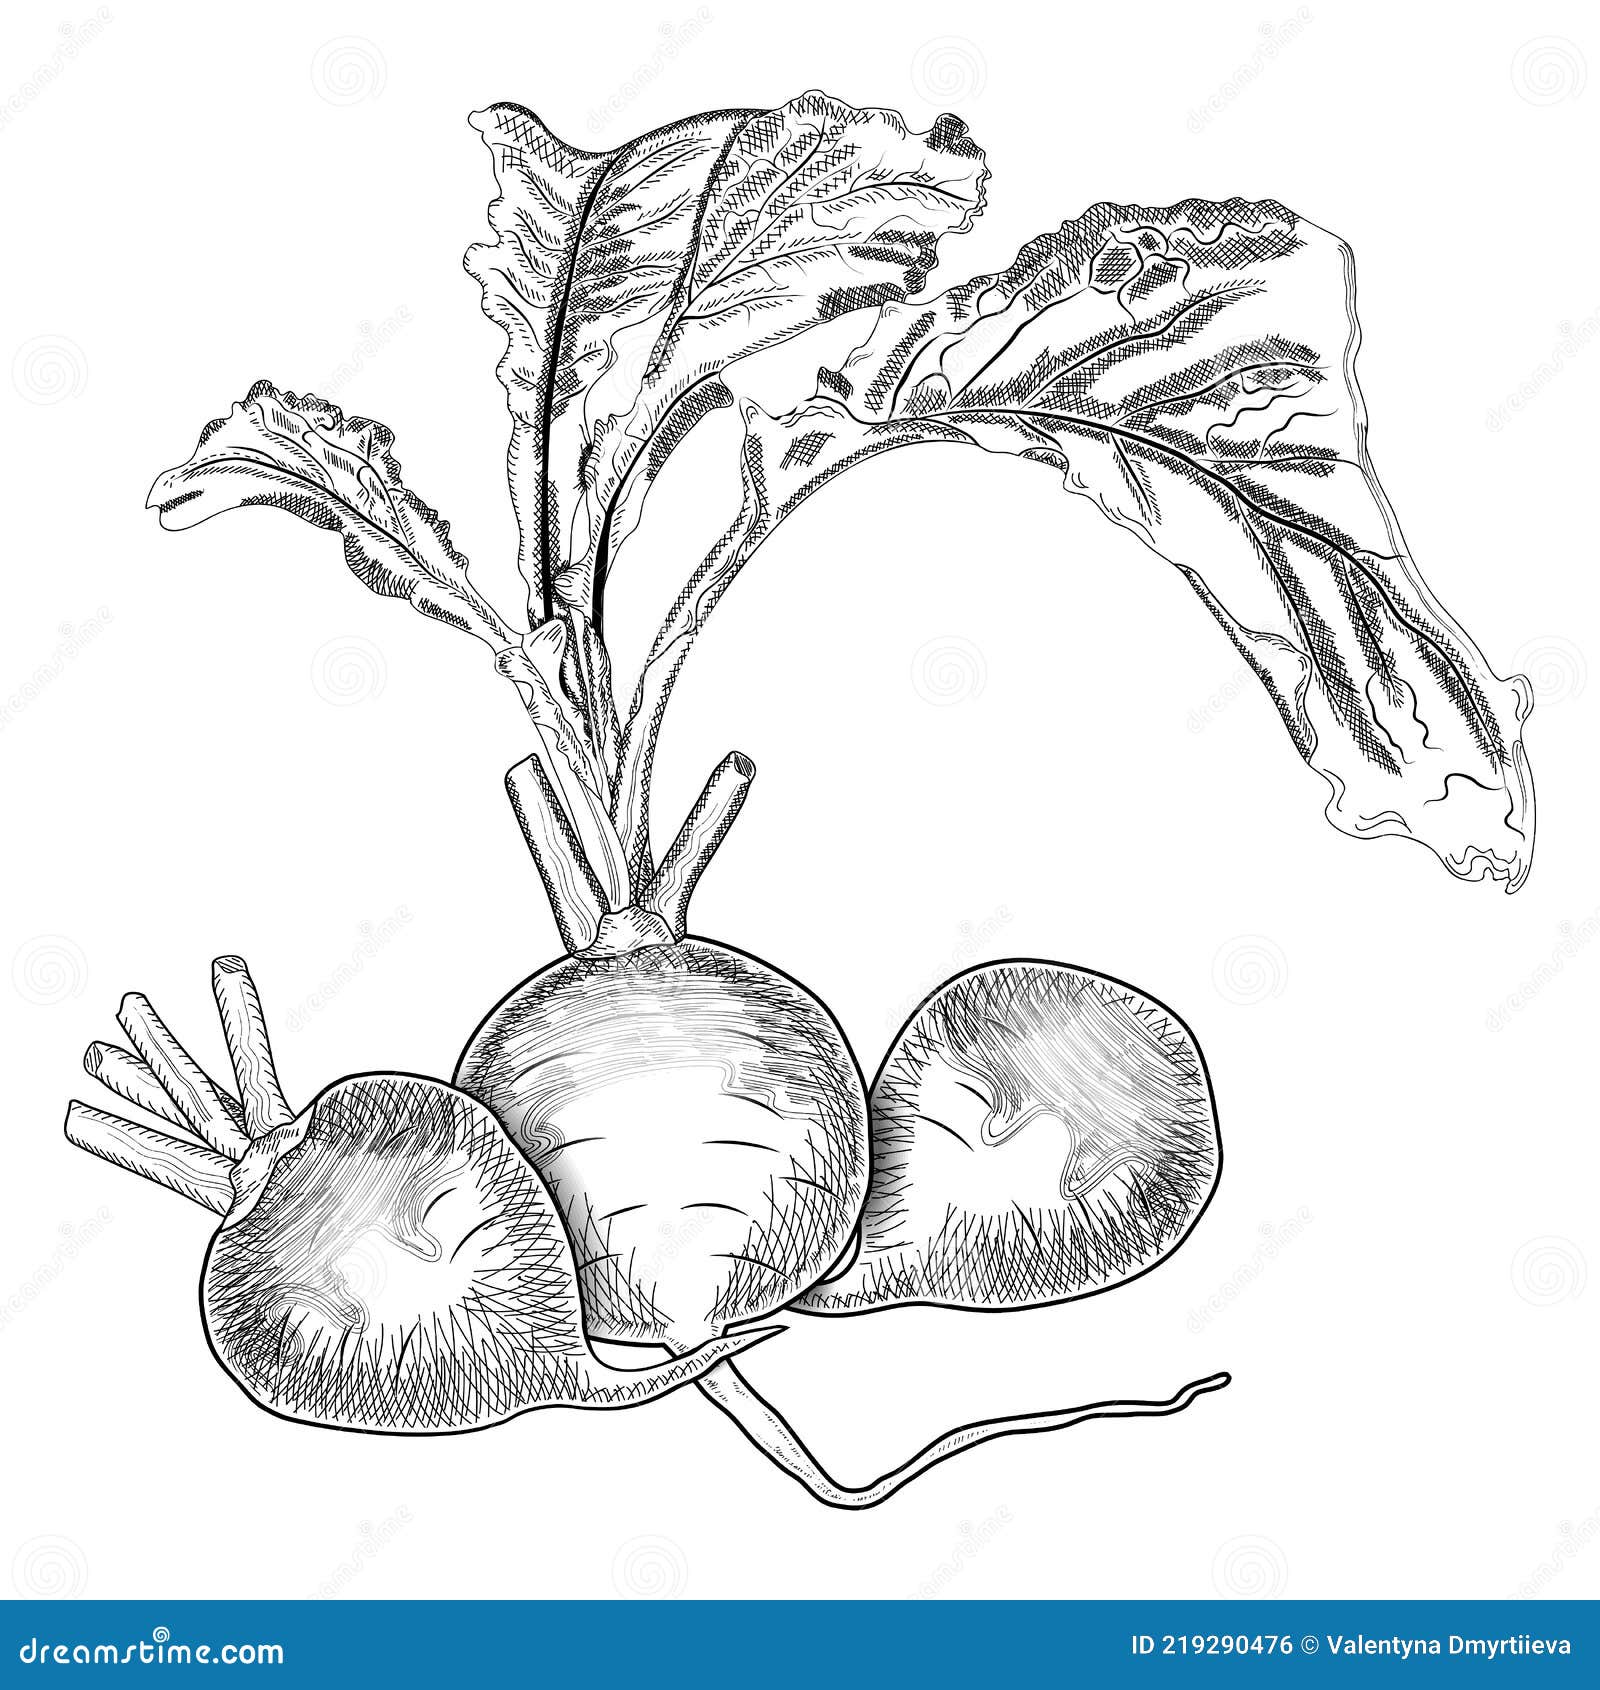 Premium Vector  Turnip coloring page for kids kdp interior turnip  vegetable drawing turnip vegetable clipart black